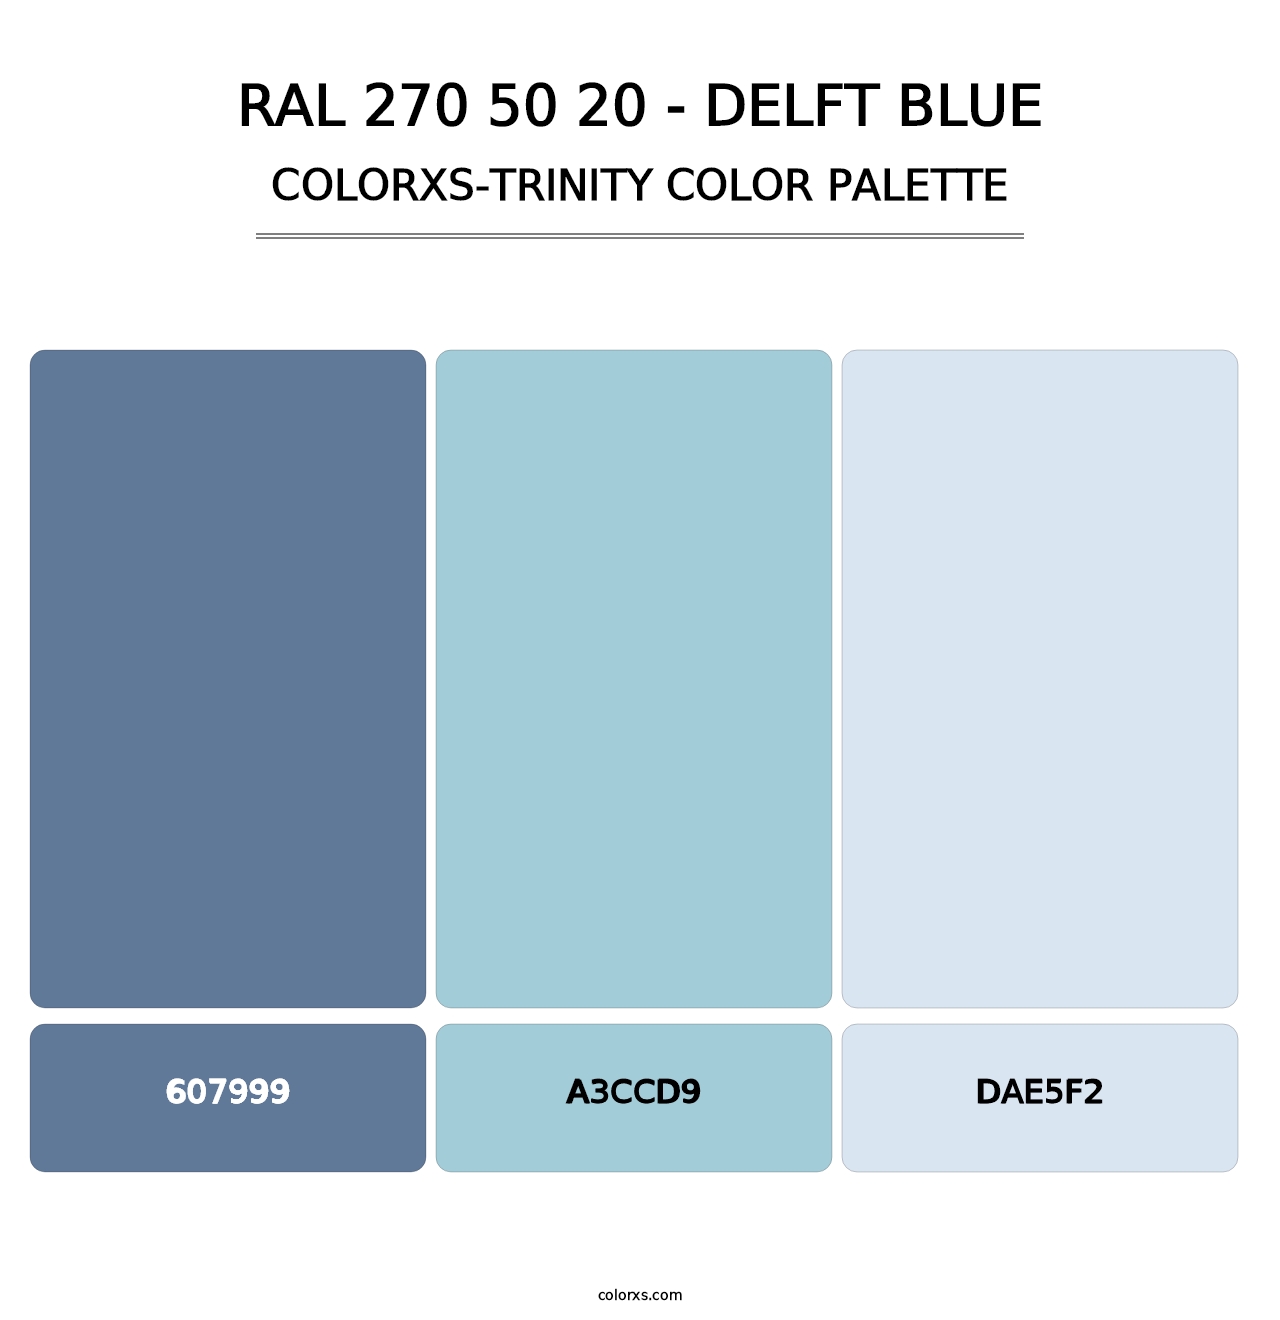 RAL 270 50 20 - Delft Blue - Colorxs Trinity Palette